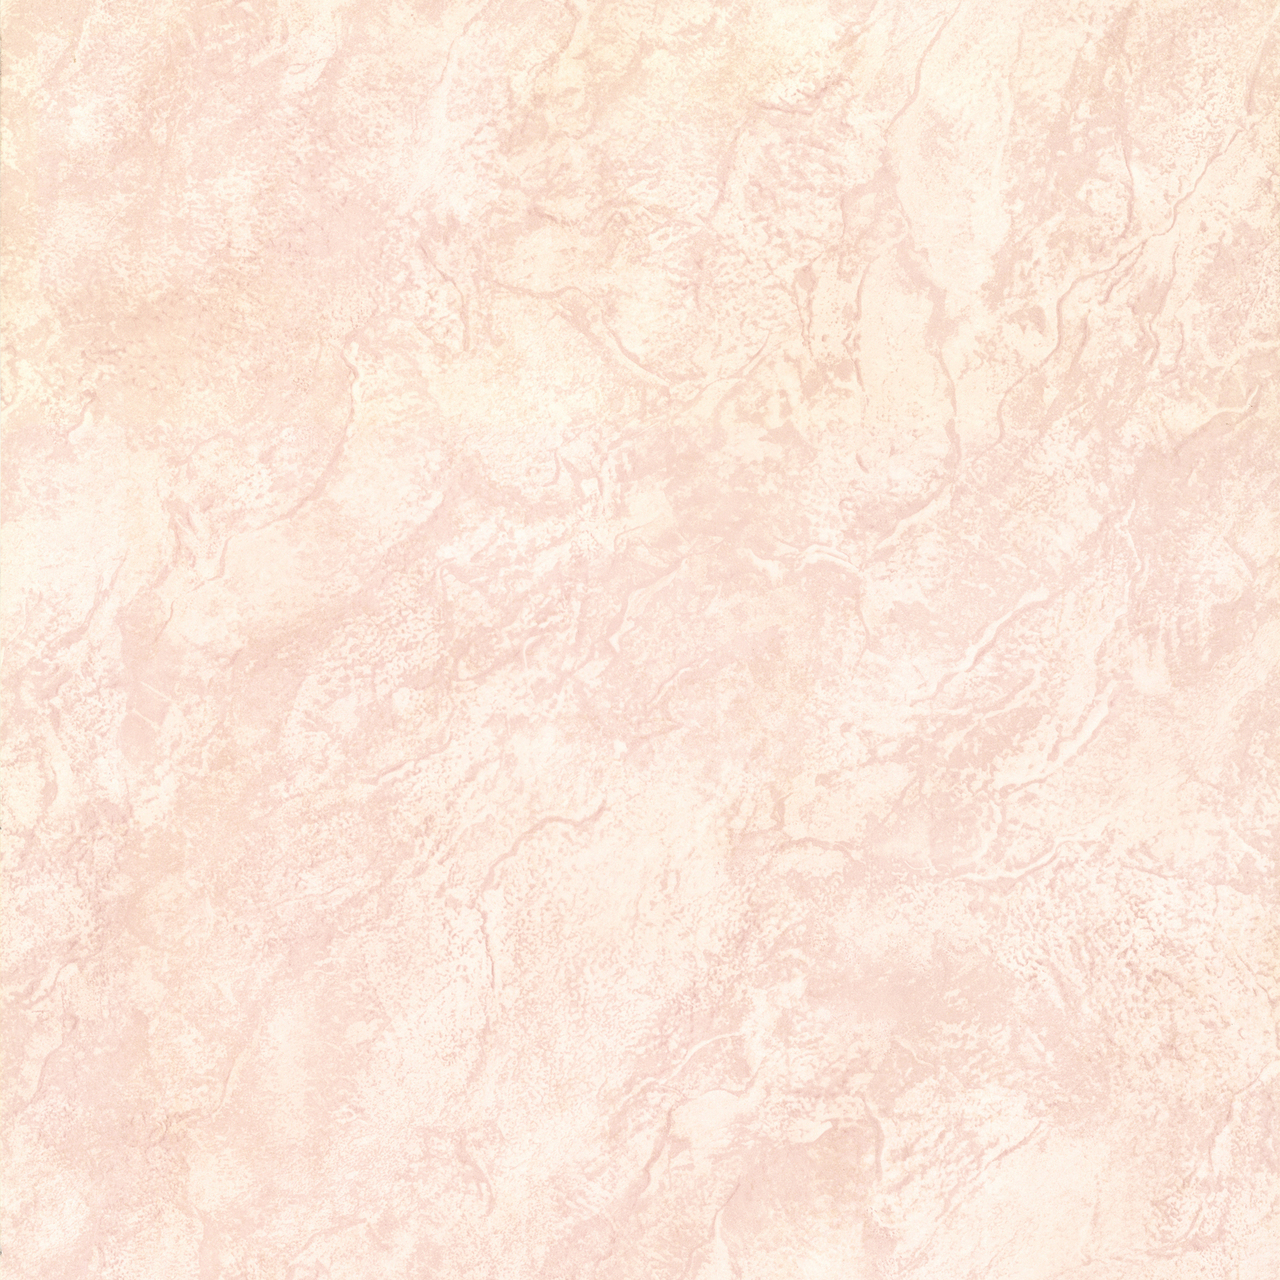 Quartz Light Pink Marble Texture 414 43560 Wallpaper